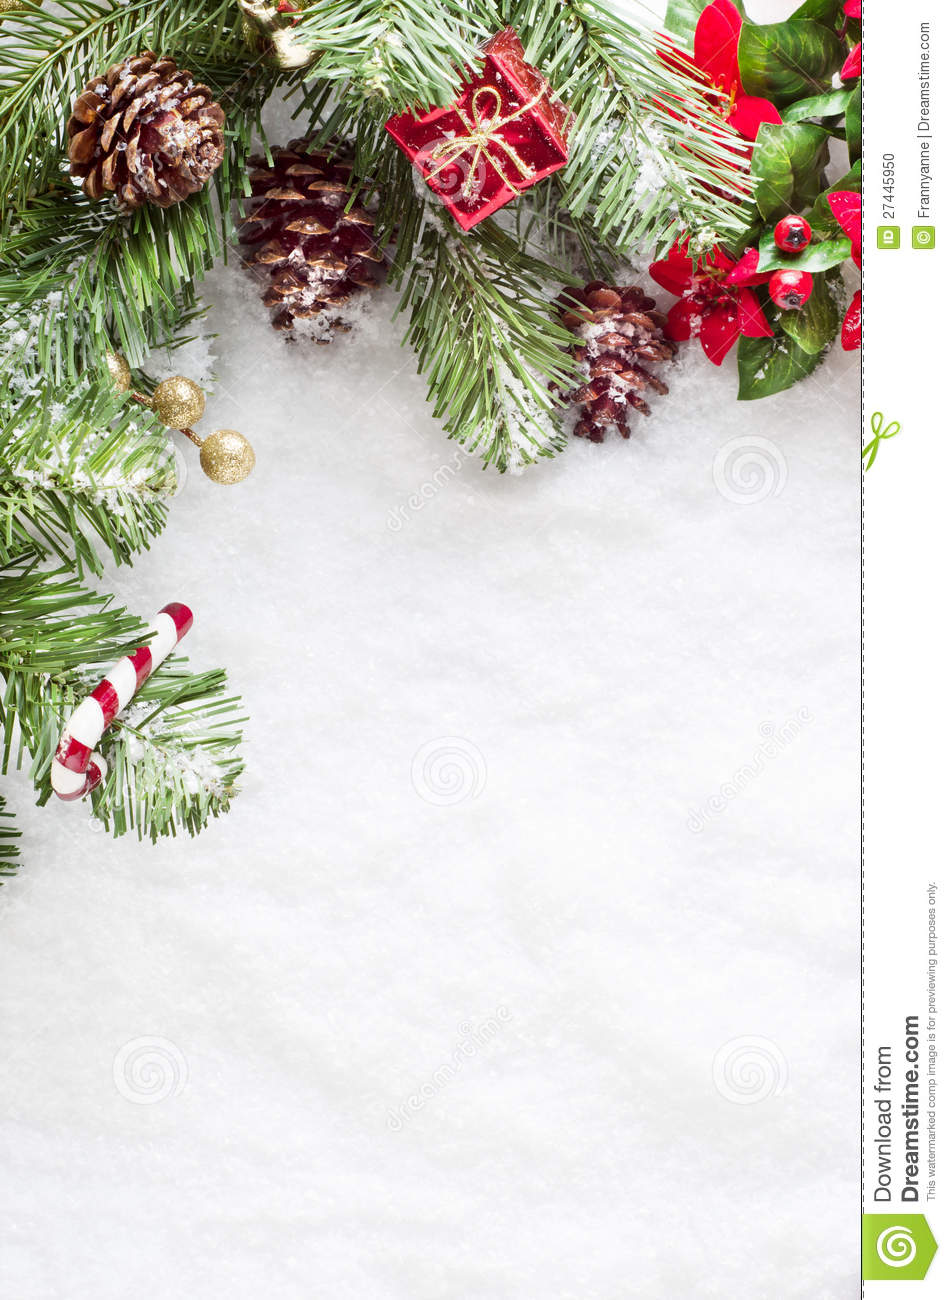 Puters Desktop With Christmas Background Portrait